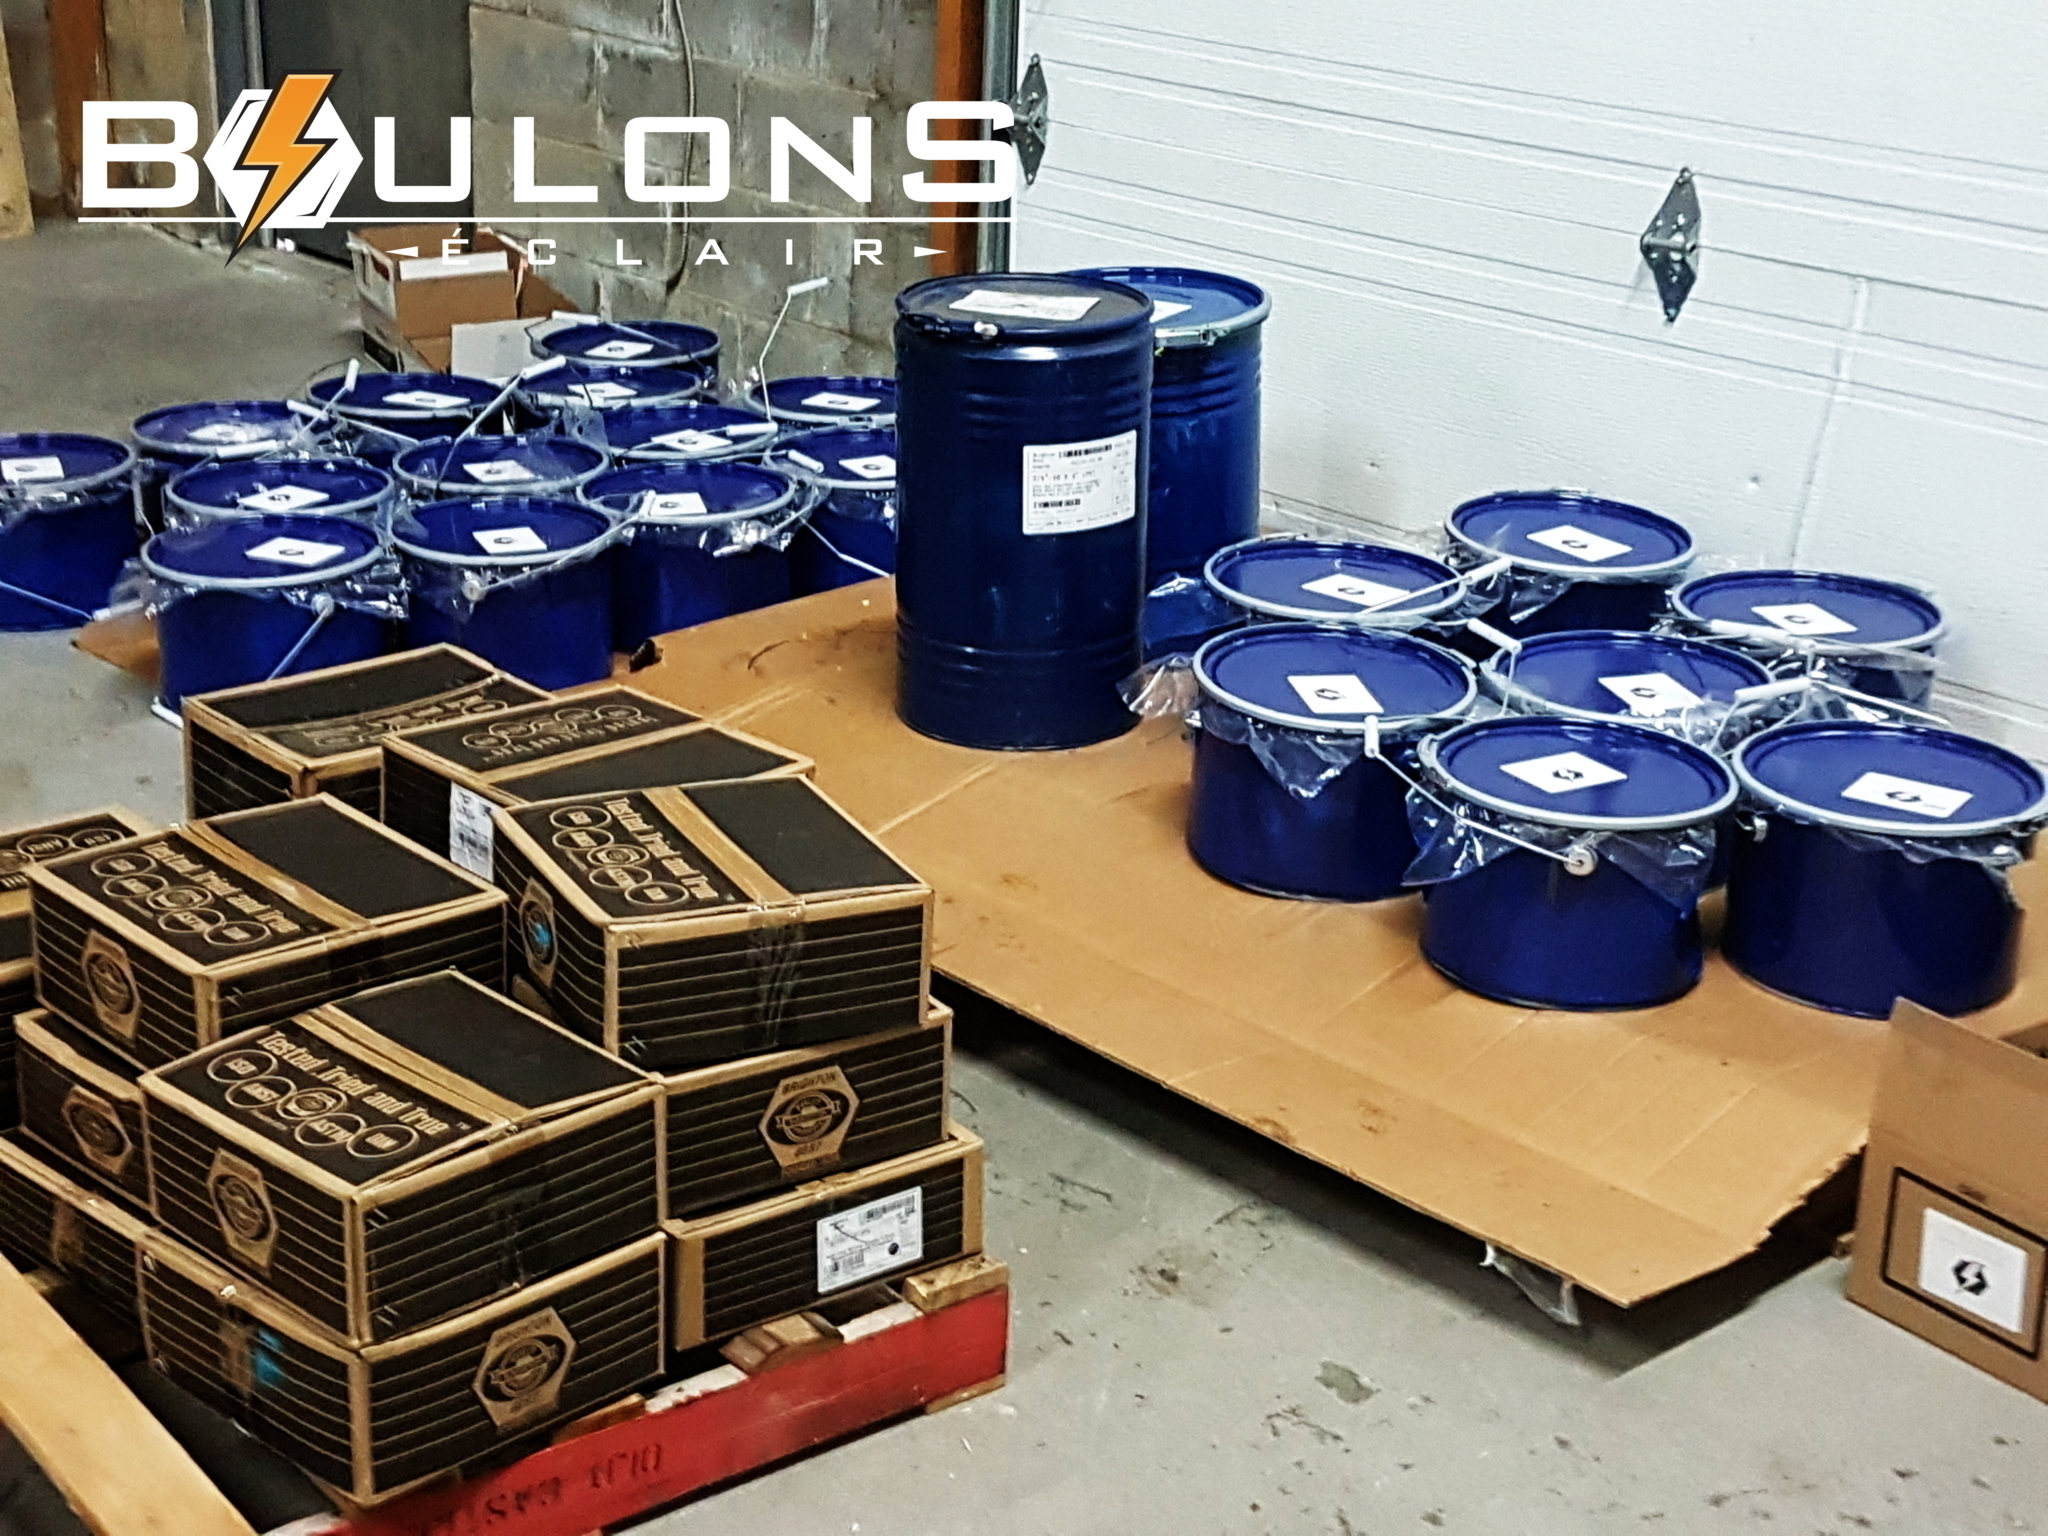 Boulons Eclair - Industrial Equipment & Supplies